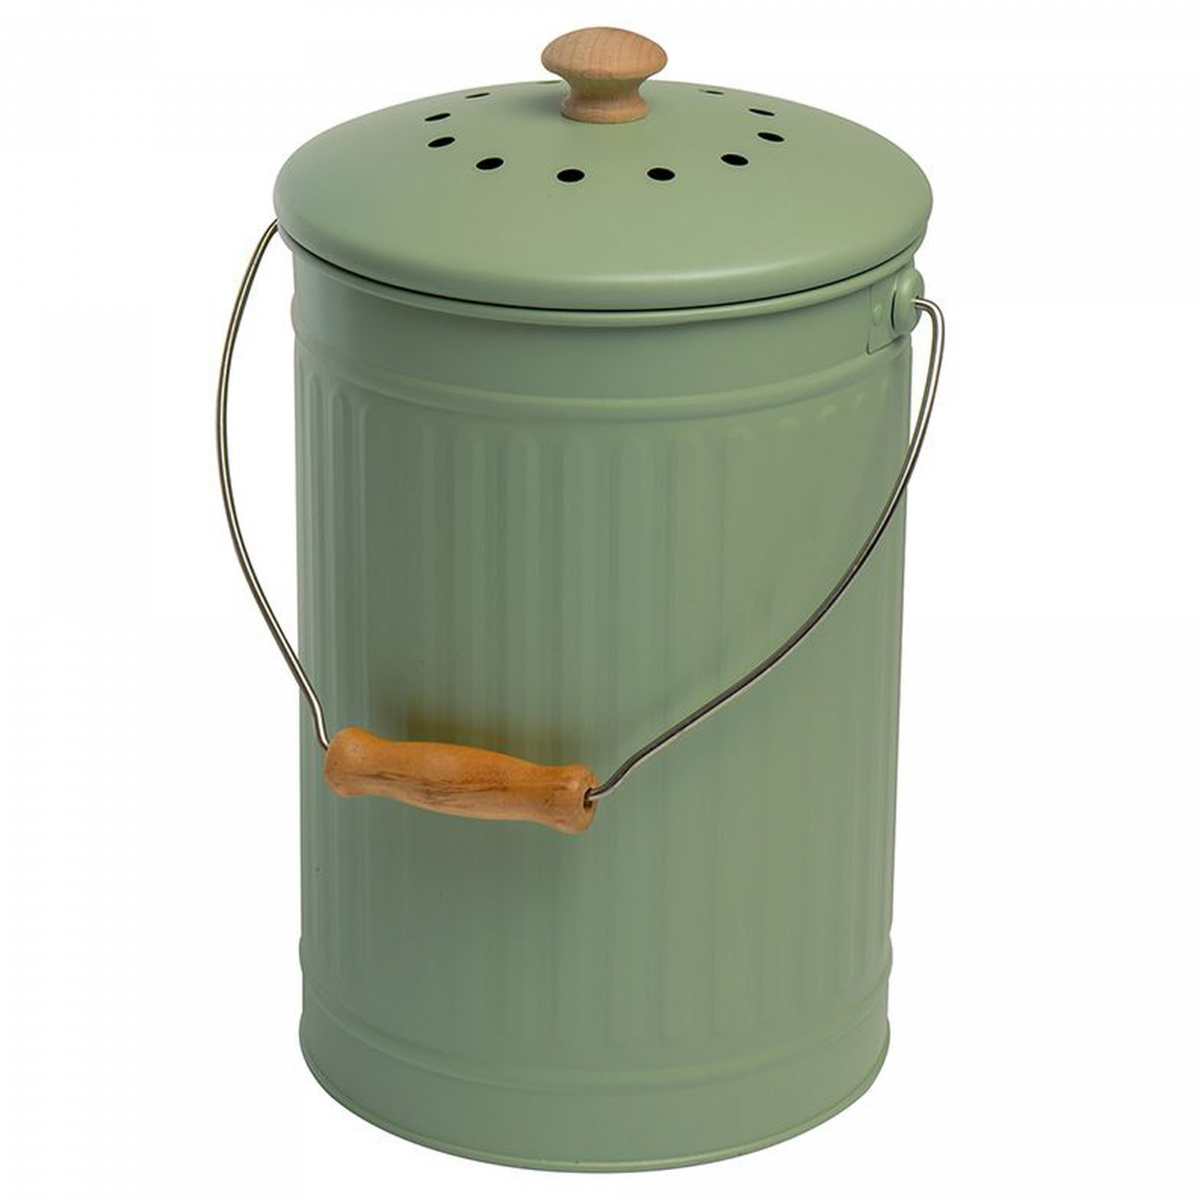 https://media.hokuskrokus.net/8283-large_default/eddingtons-compost-bin-with-charcoal-filter-7-l-green.jpg